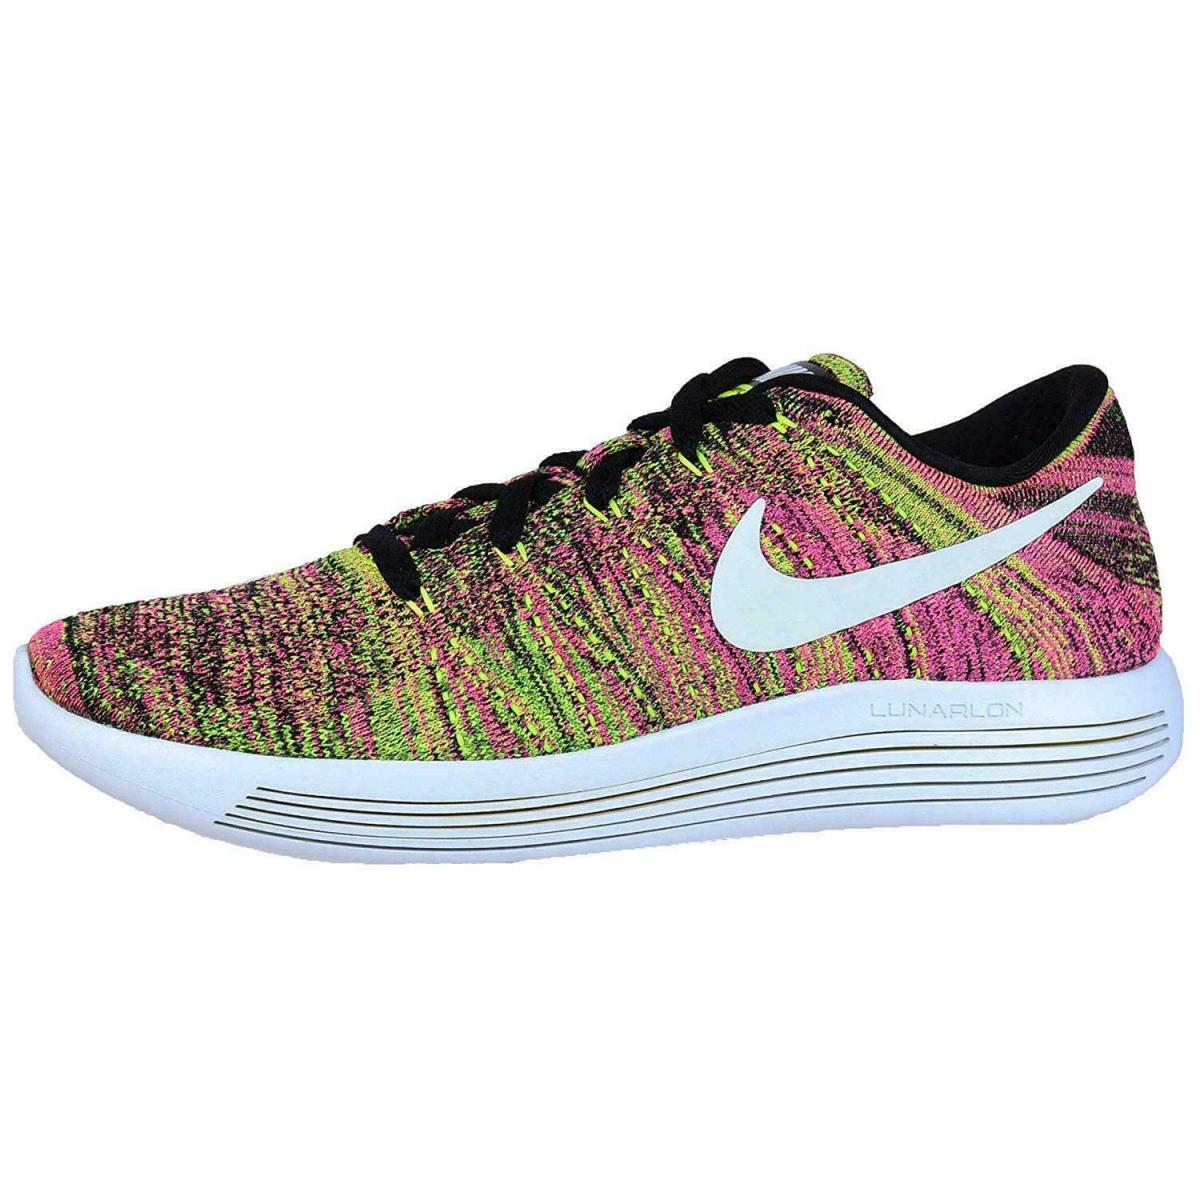 Nike shoes LunarEpic Low Flyknit - Multi Color 2